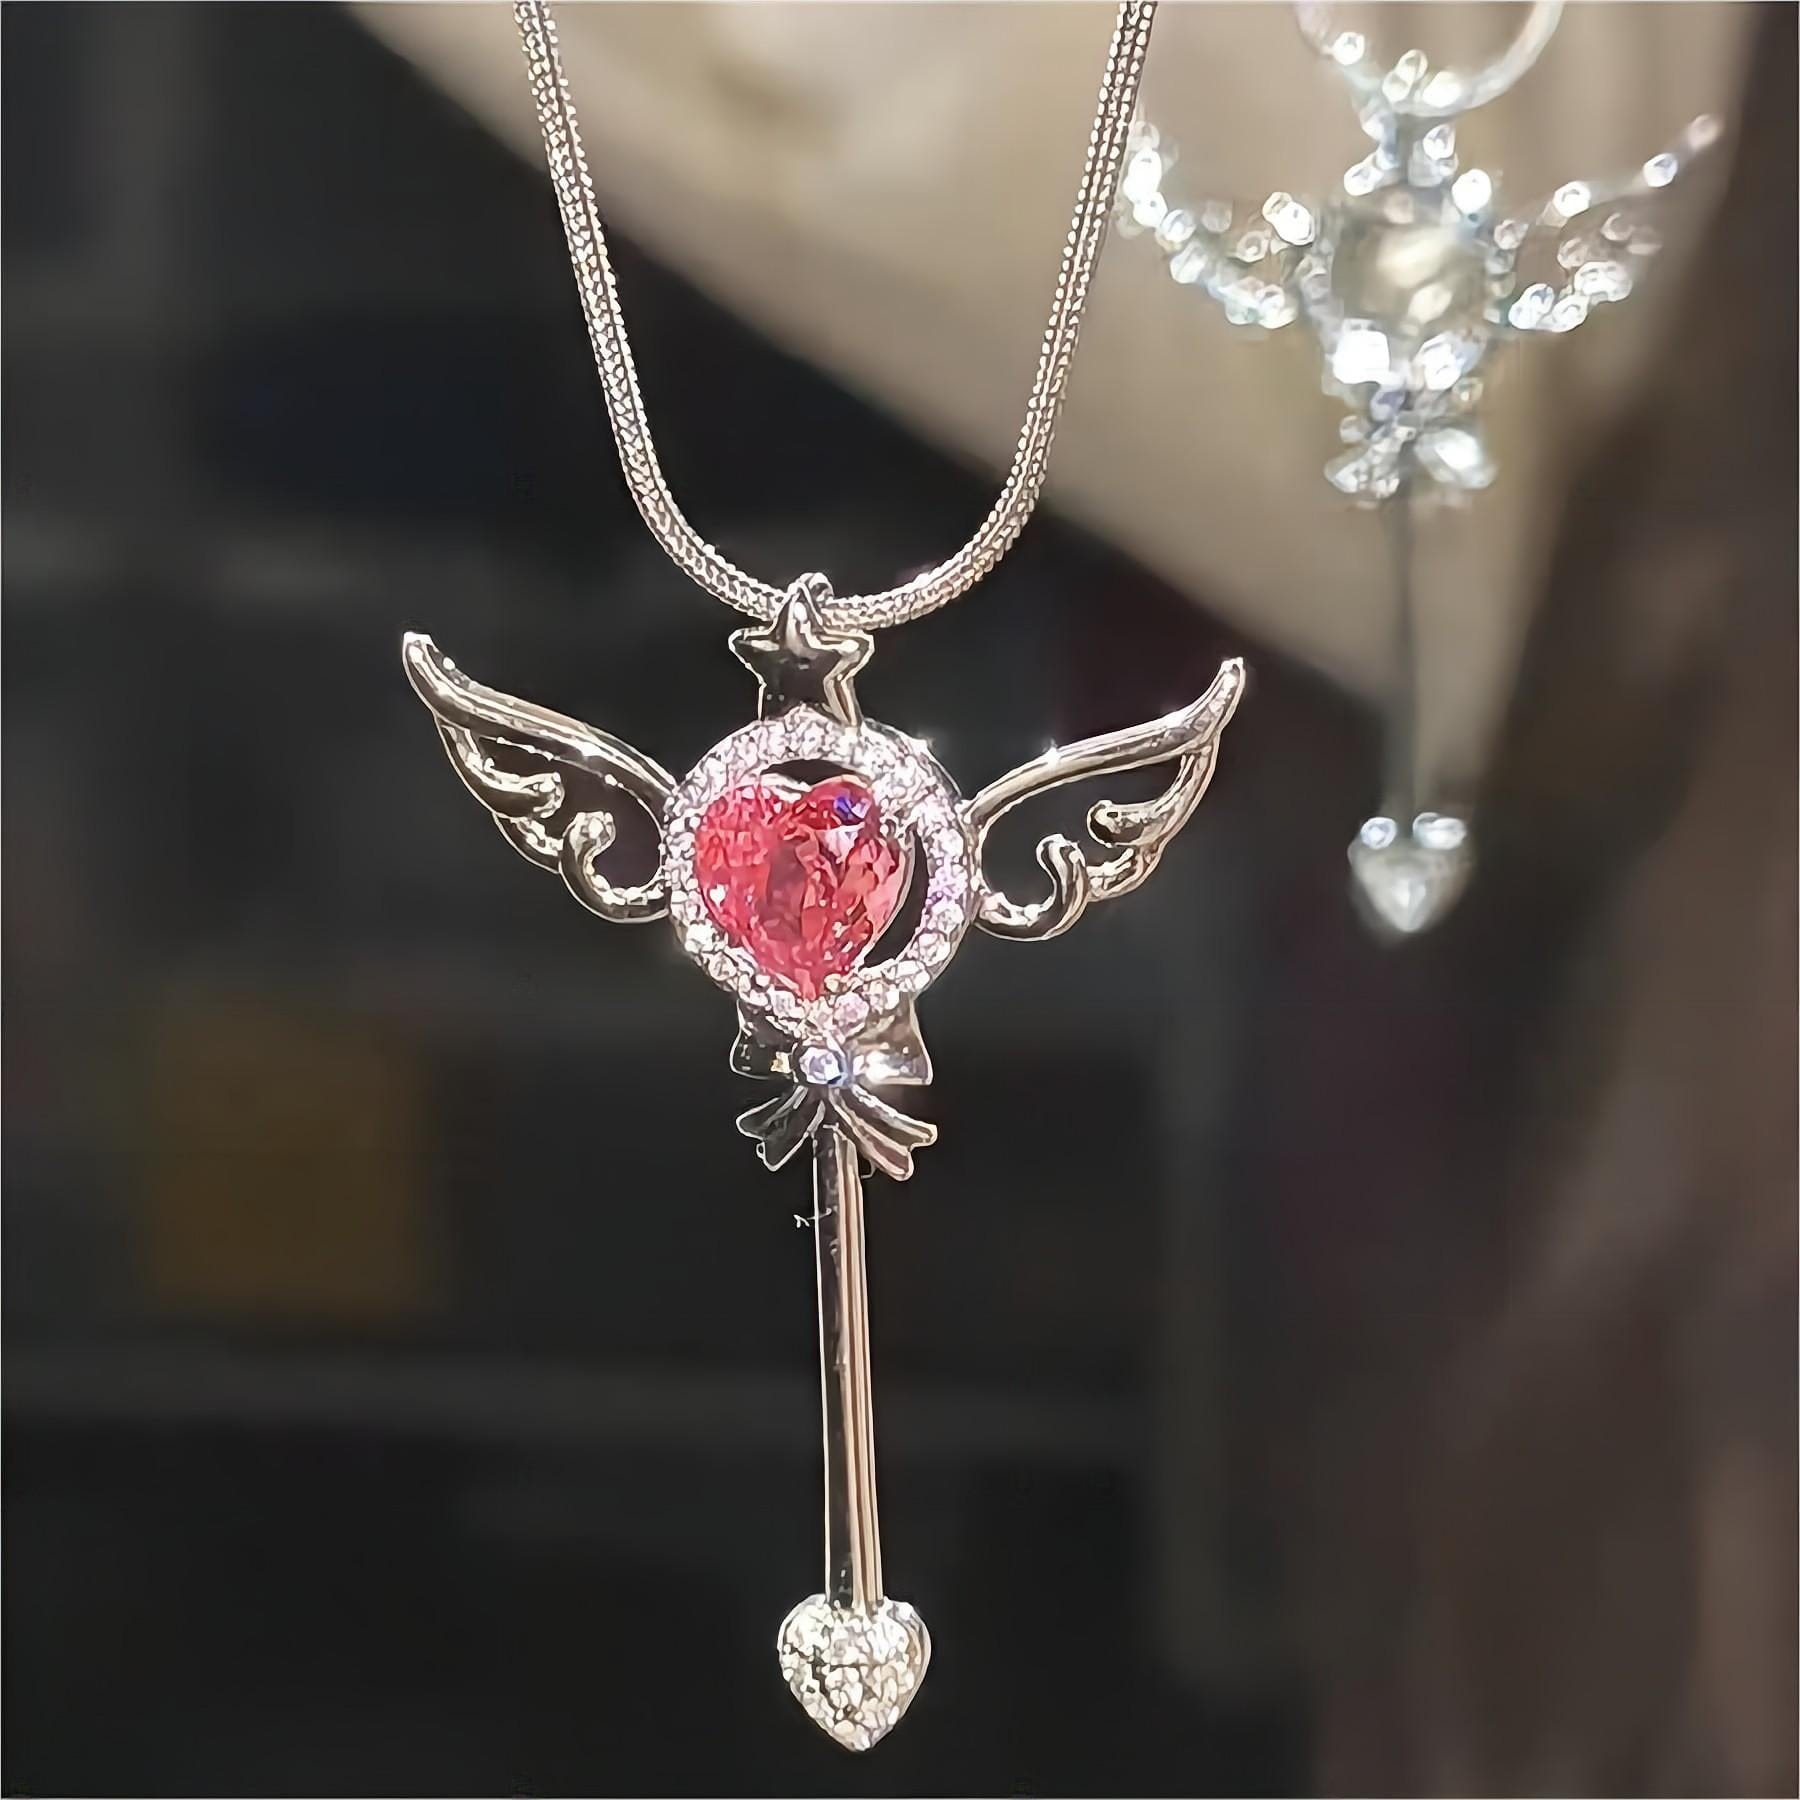 Swarovski Crystal Pink Heart Magic Wand Necklace